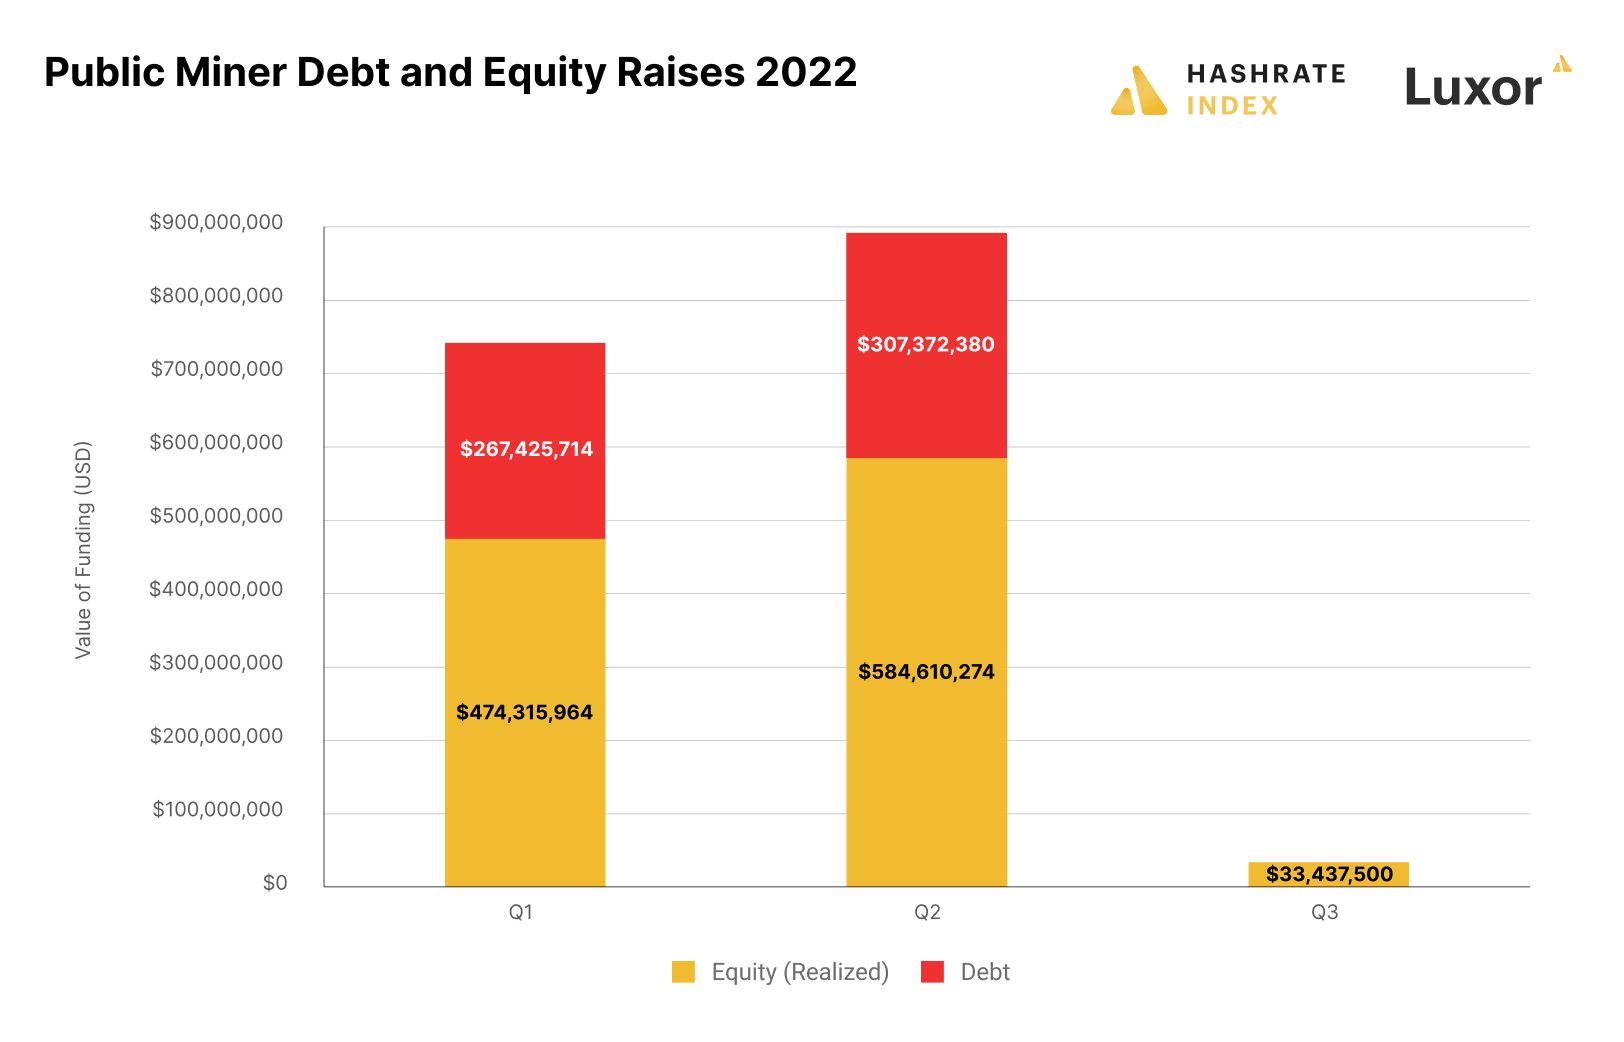 Public bitcoin miner debt and equity raises 2022 | Source: public filings